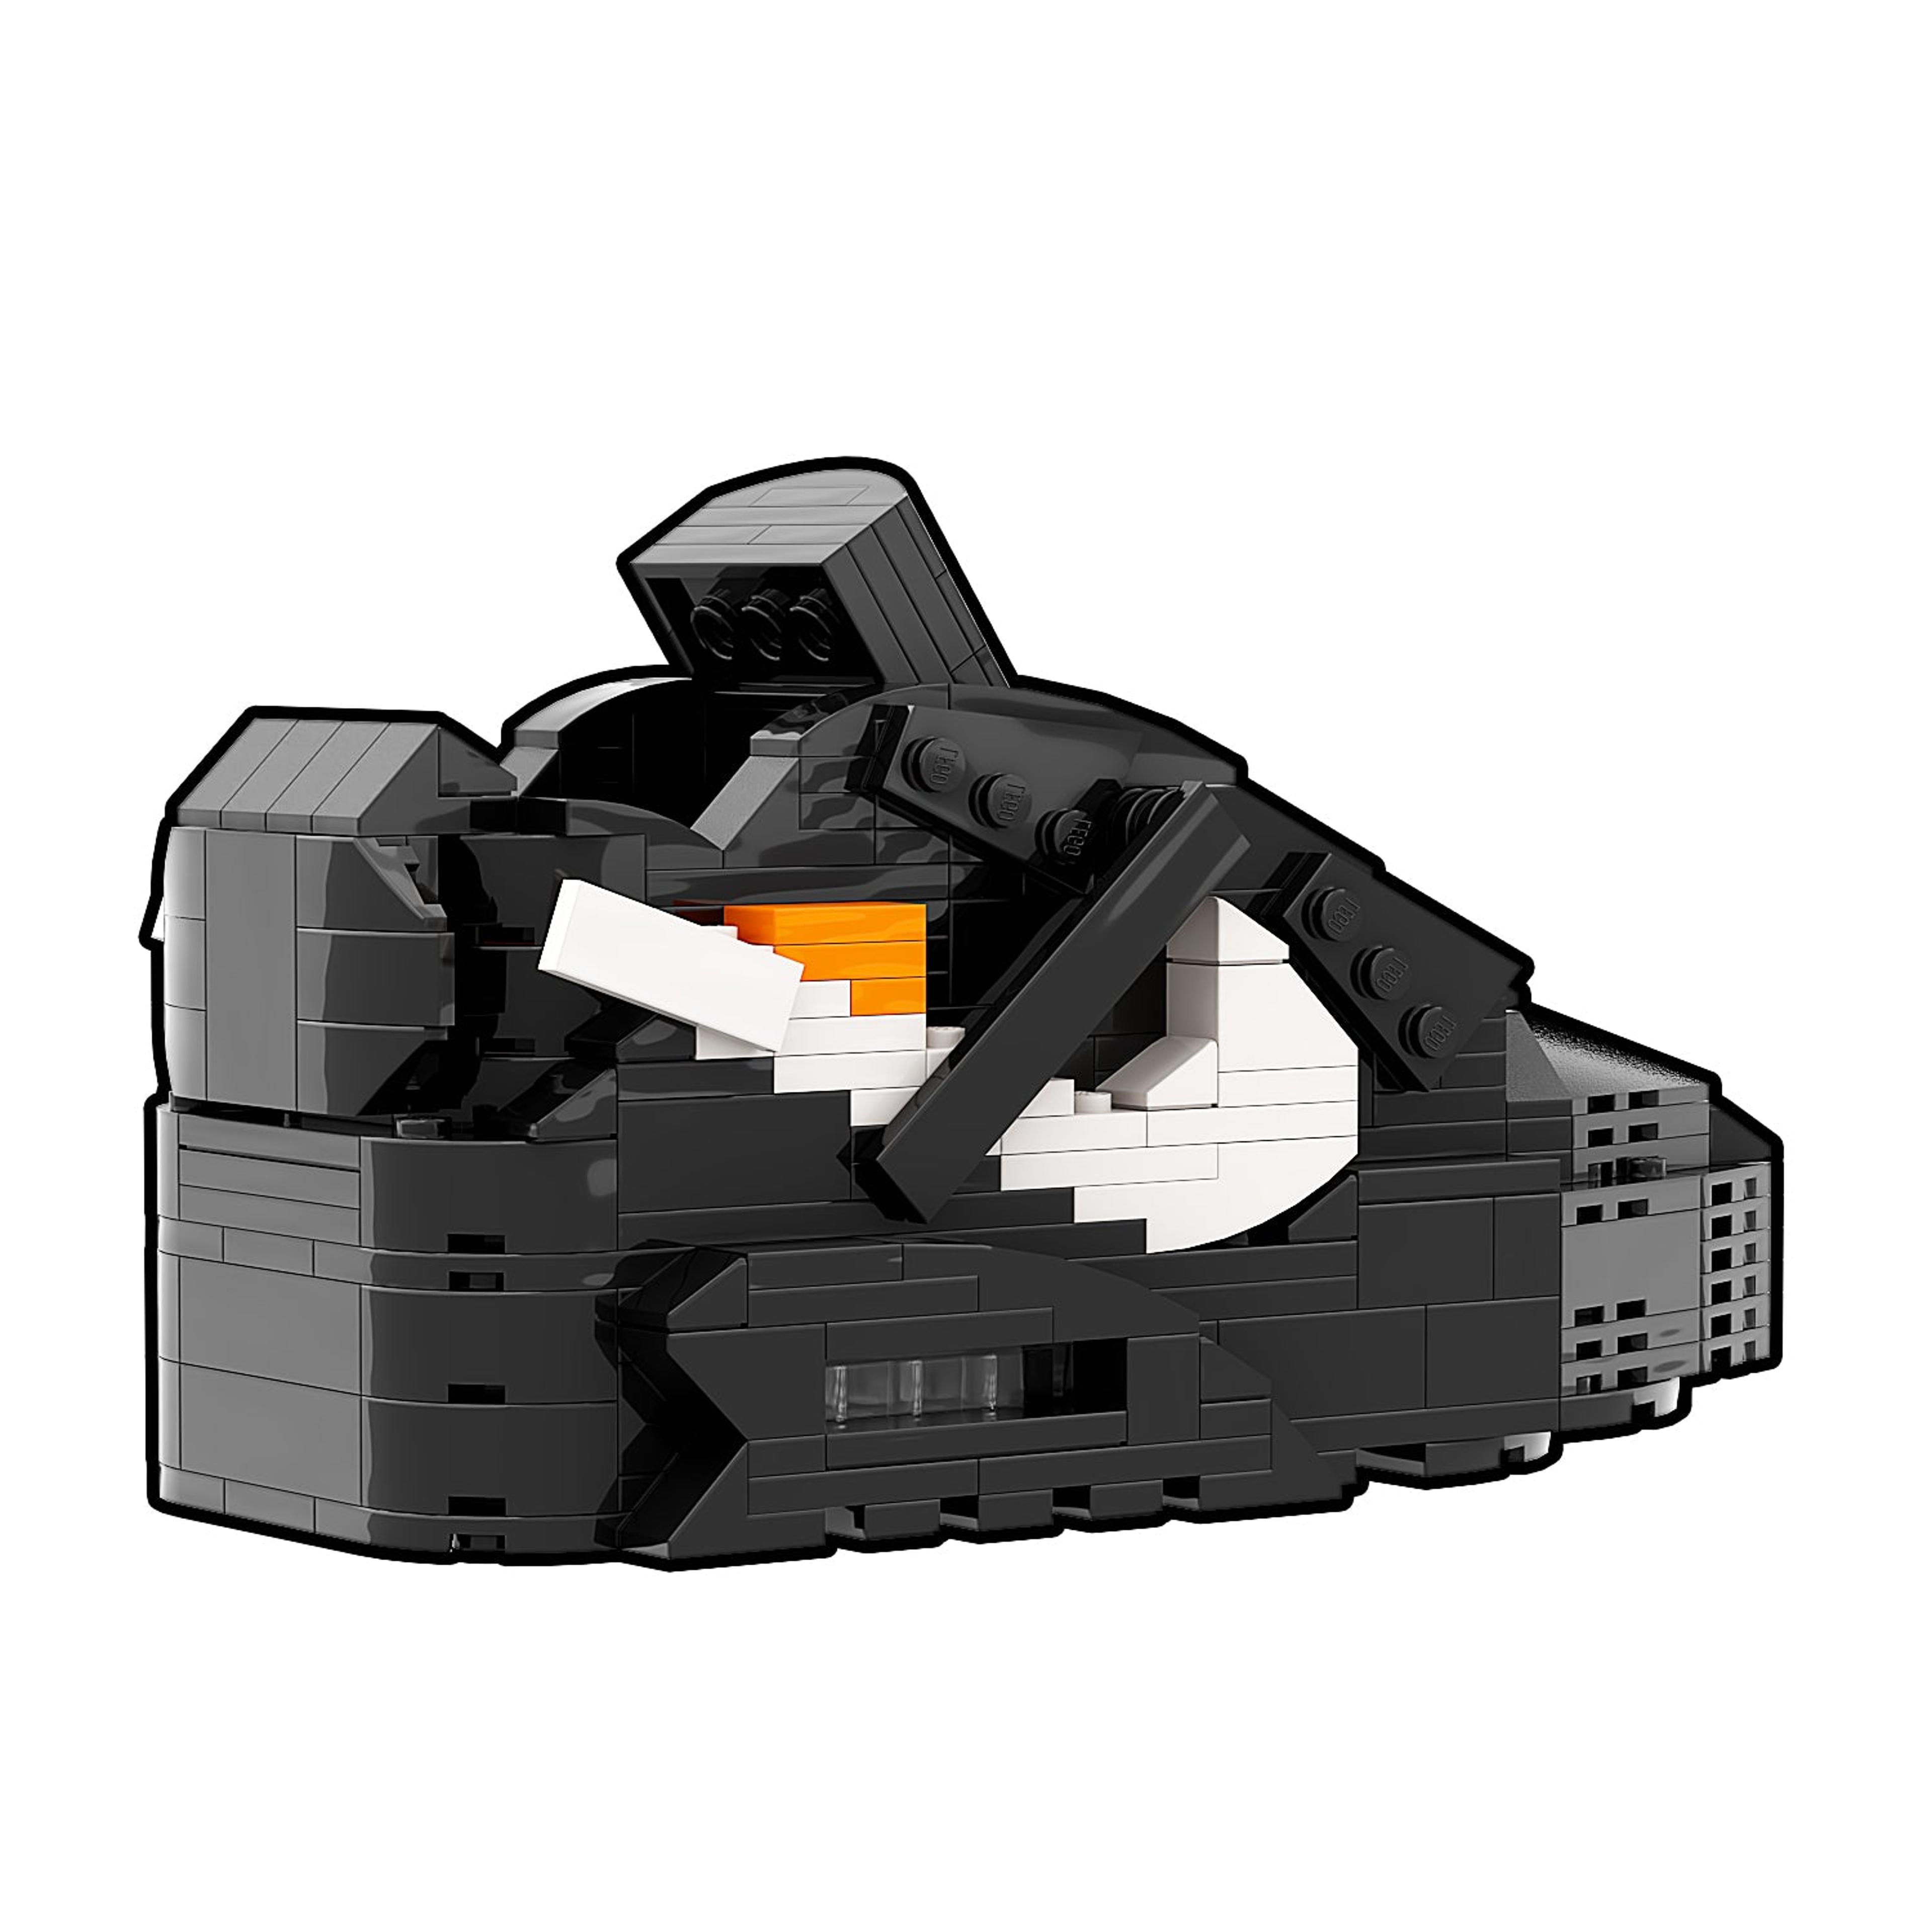 Alternate View 7 of REGULAR Air Max 90 "Off-White Black" Sneaker Bricks with Mini Fi